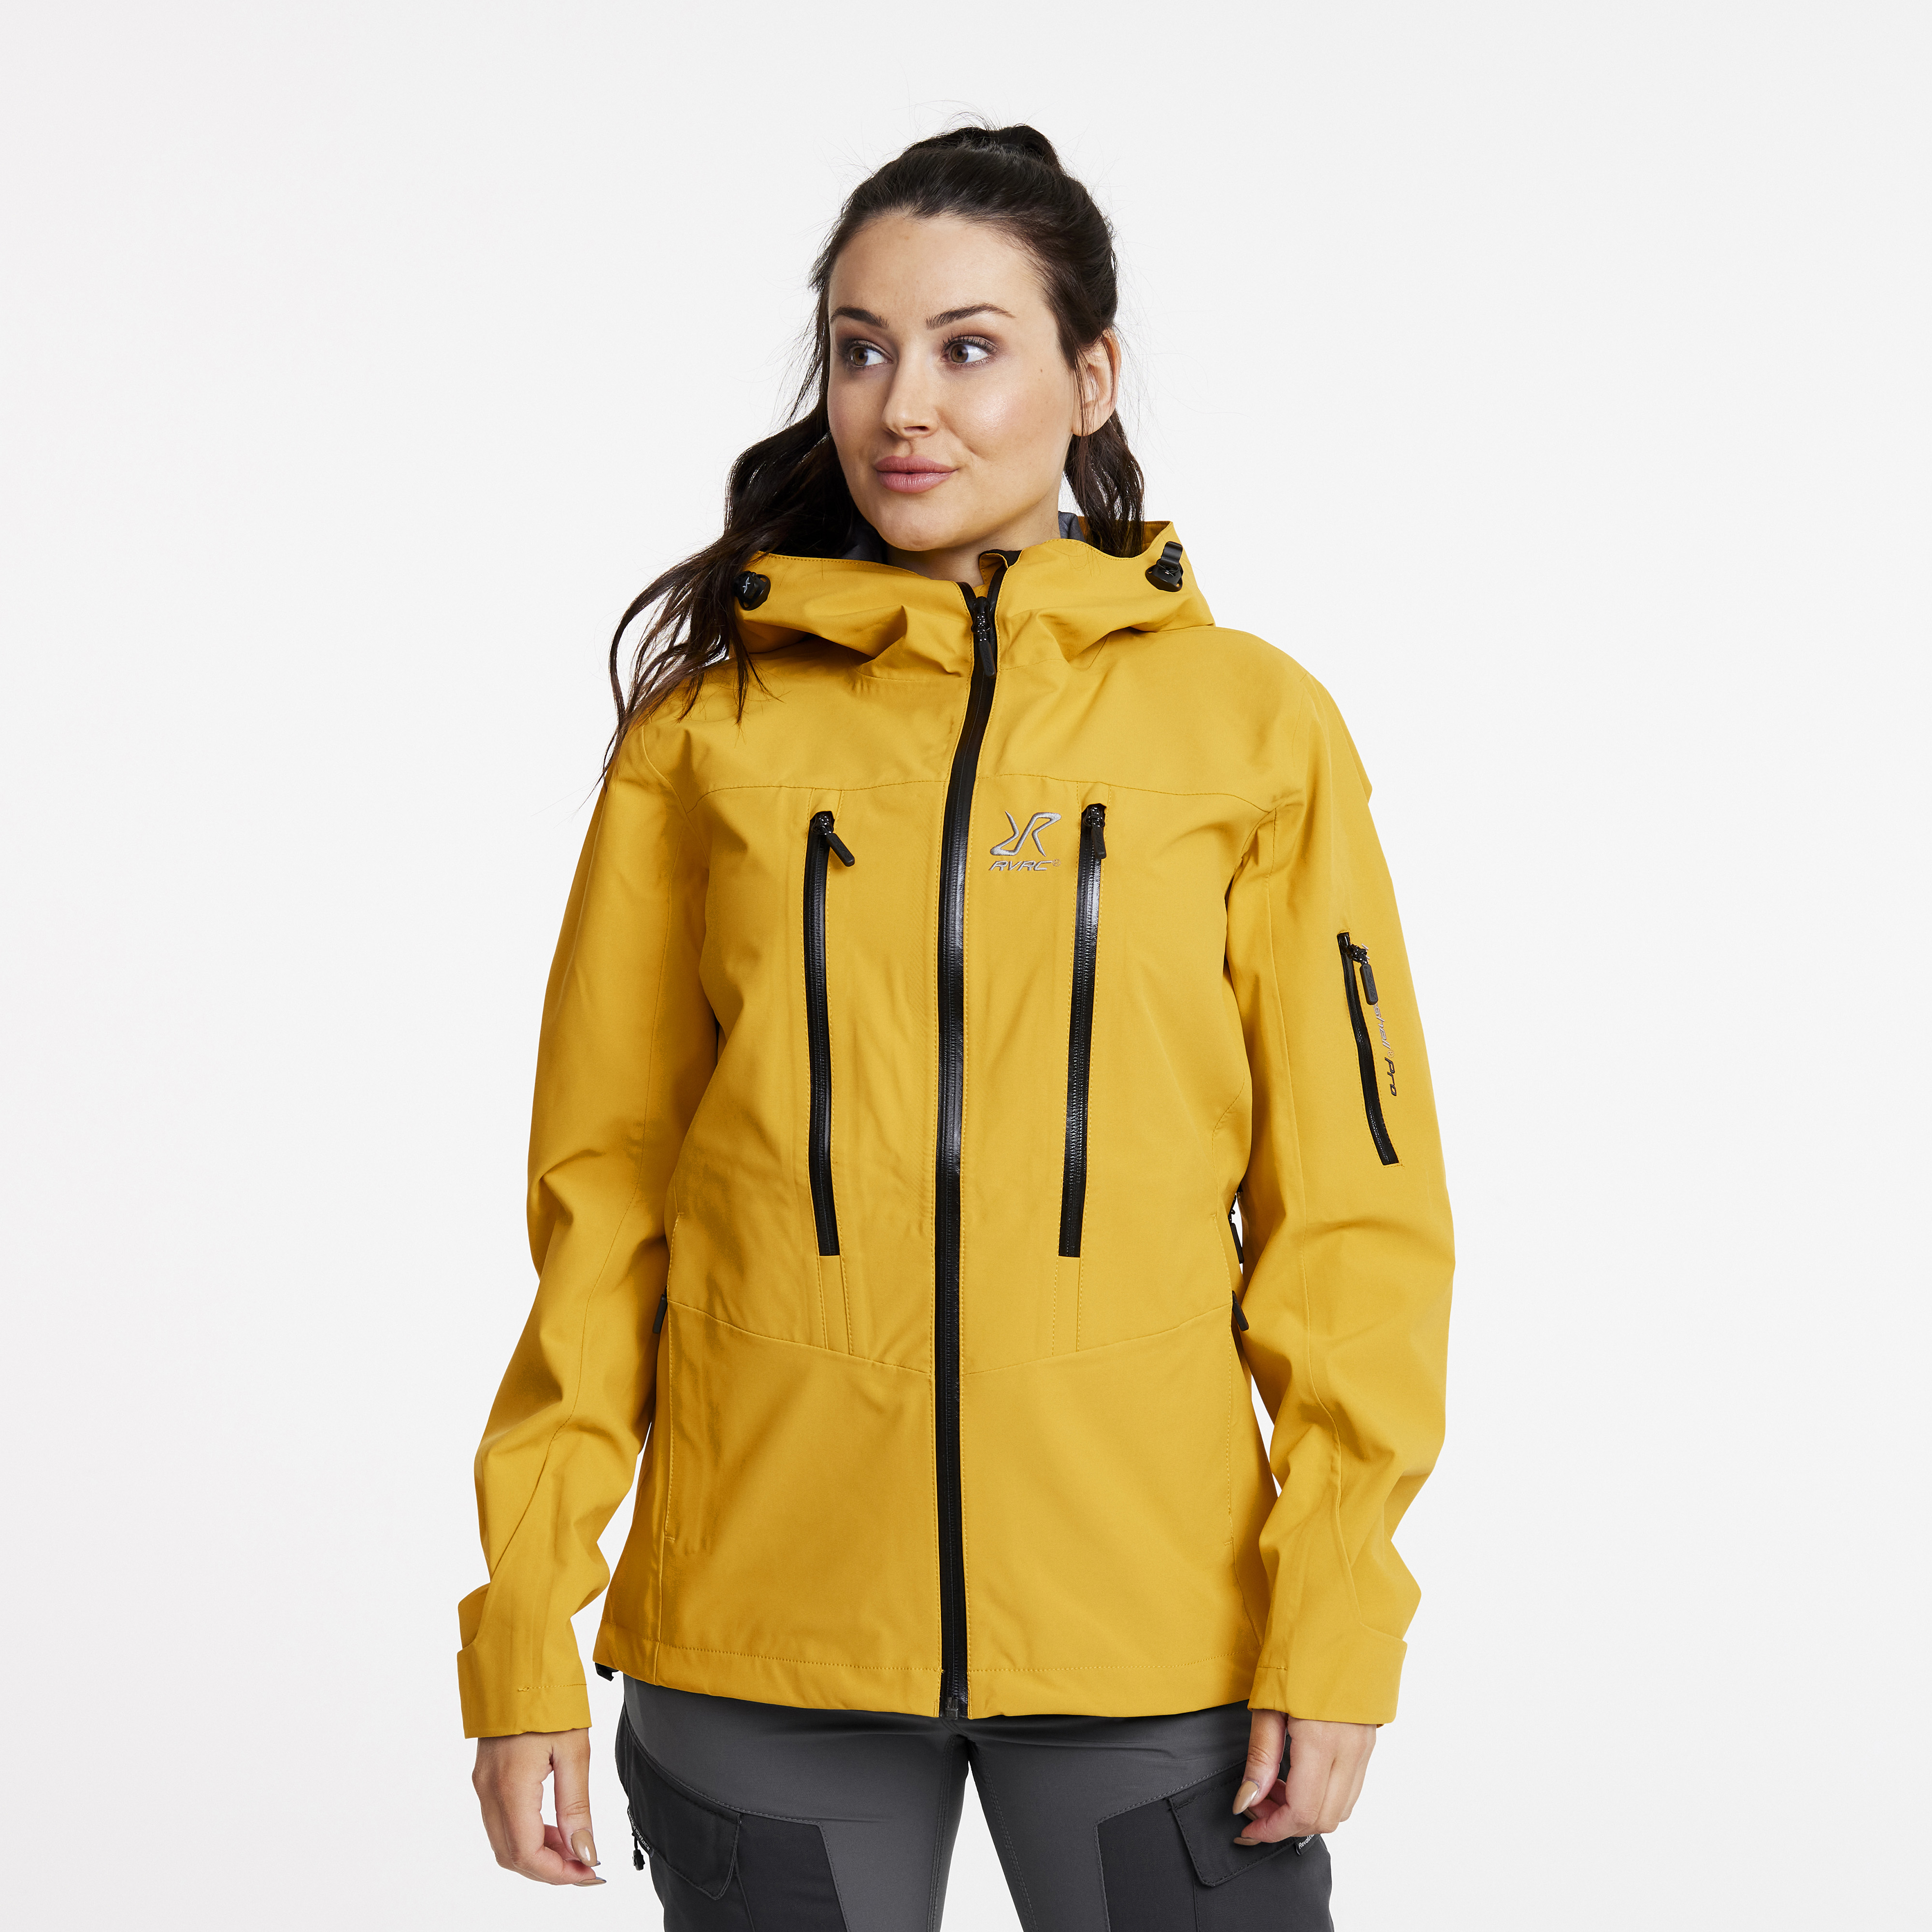 Whisper rain jacket for women in yellow